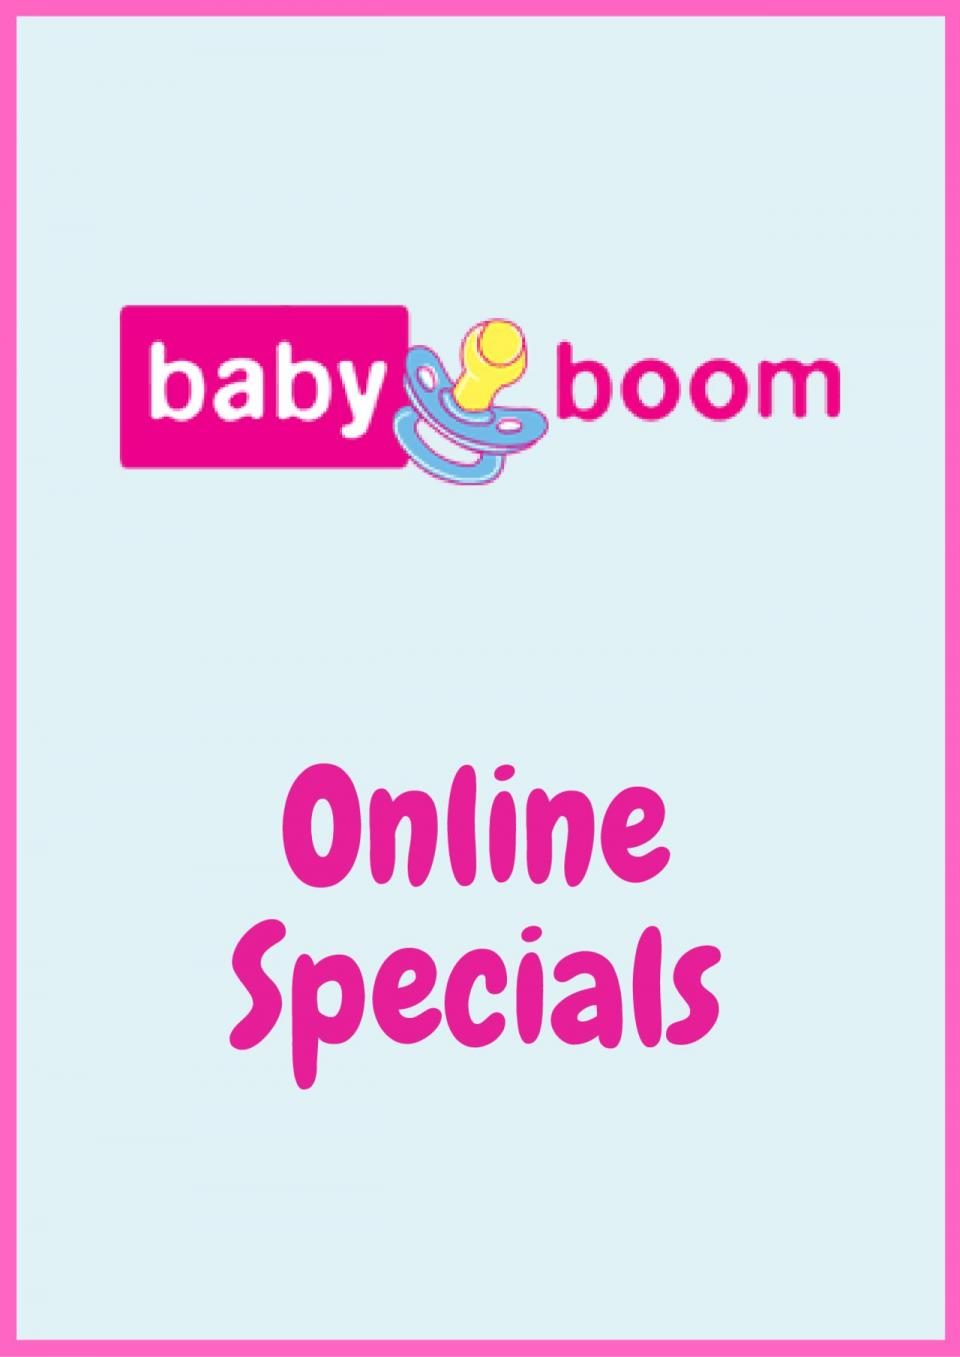 baby boom specials 20 may 2020